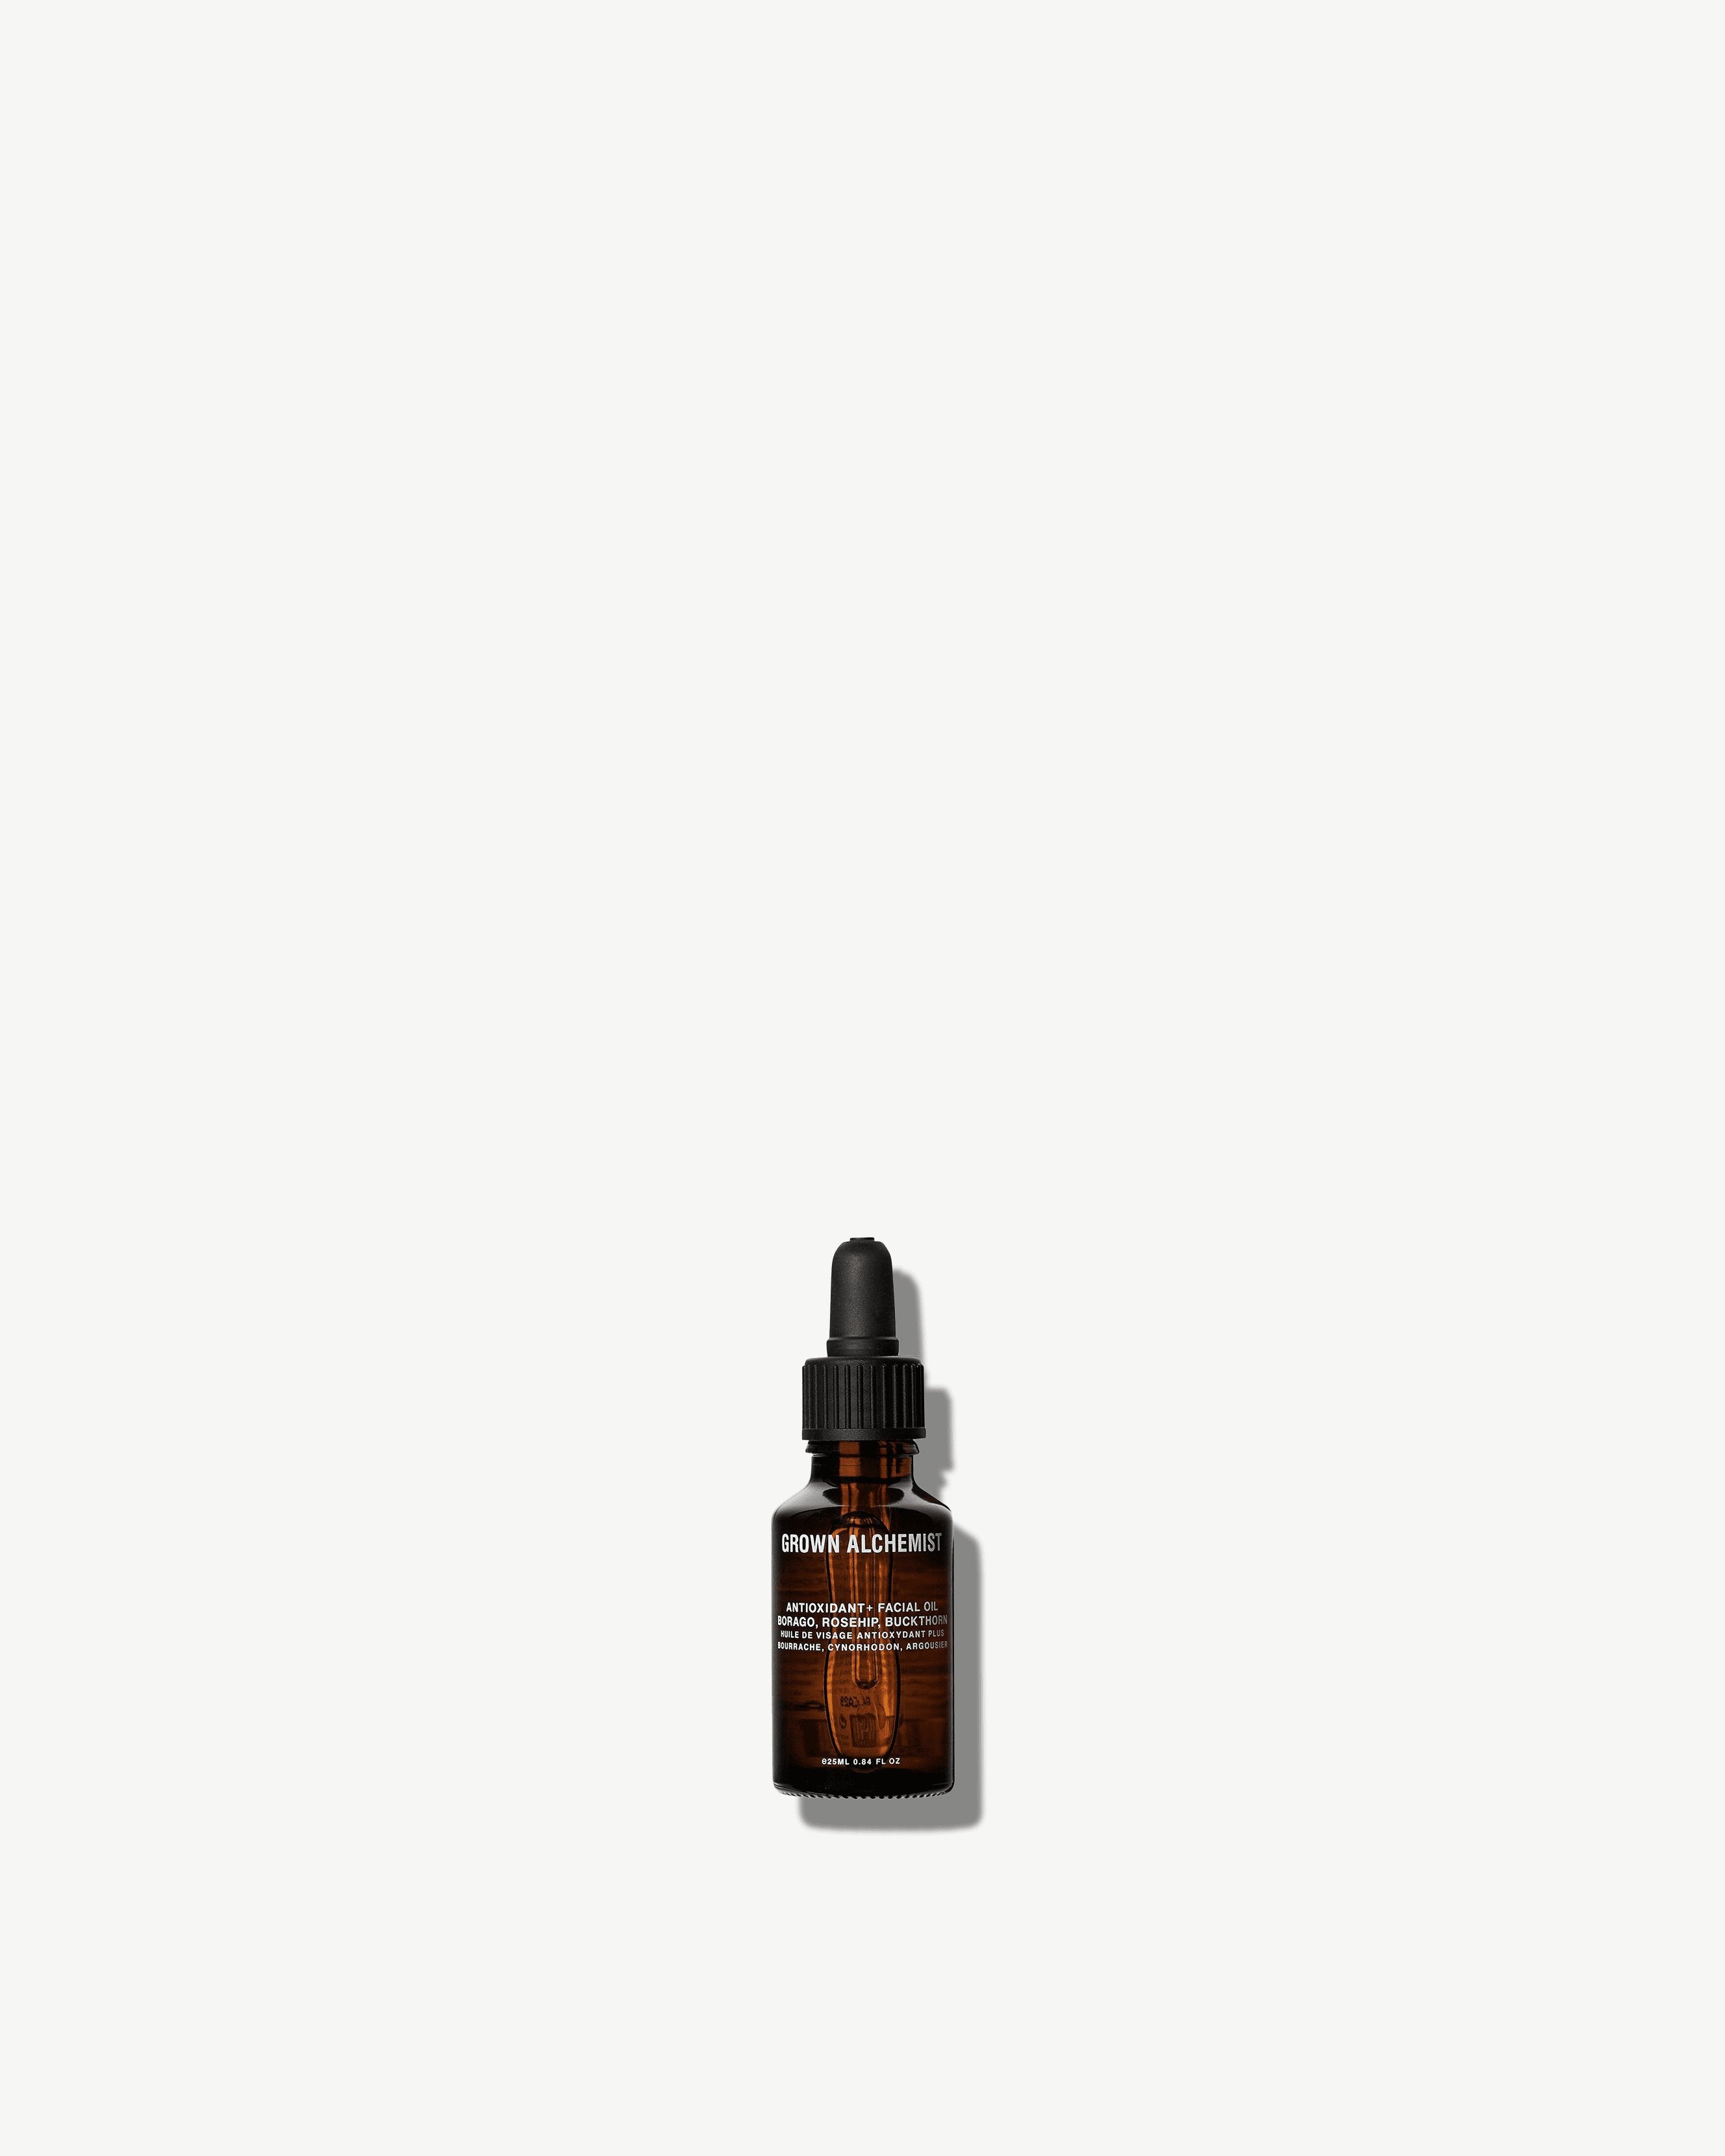 Grown Alchemist Antioxidant + Credo Clean, Natural Moisturizer Oil - Oil Facial –